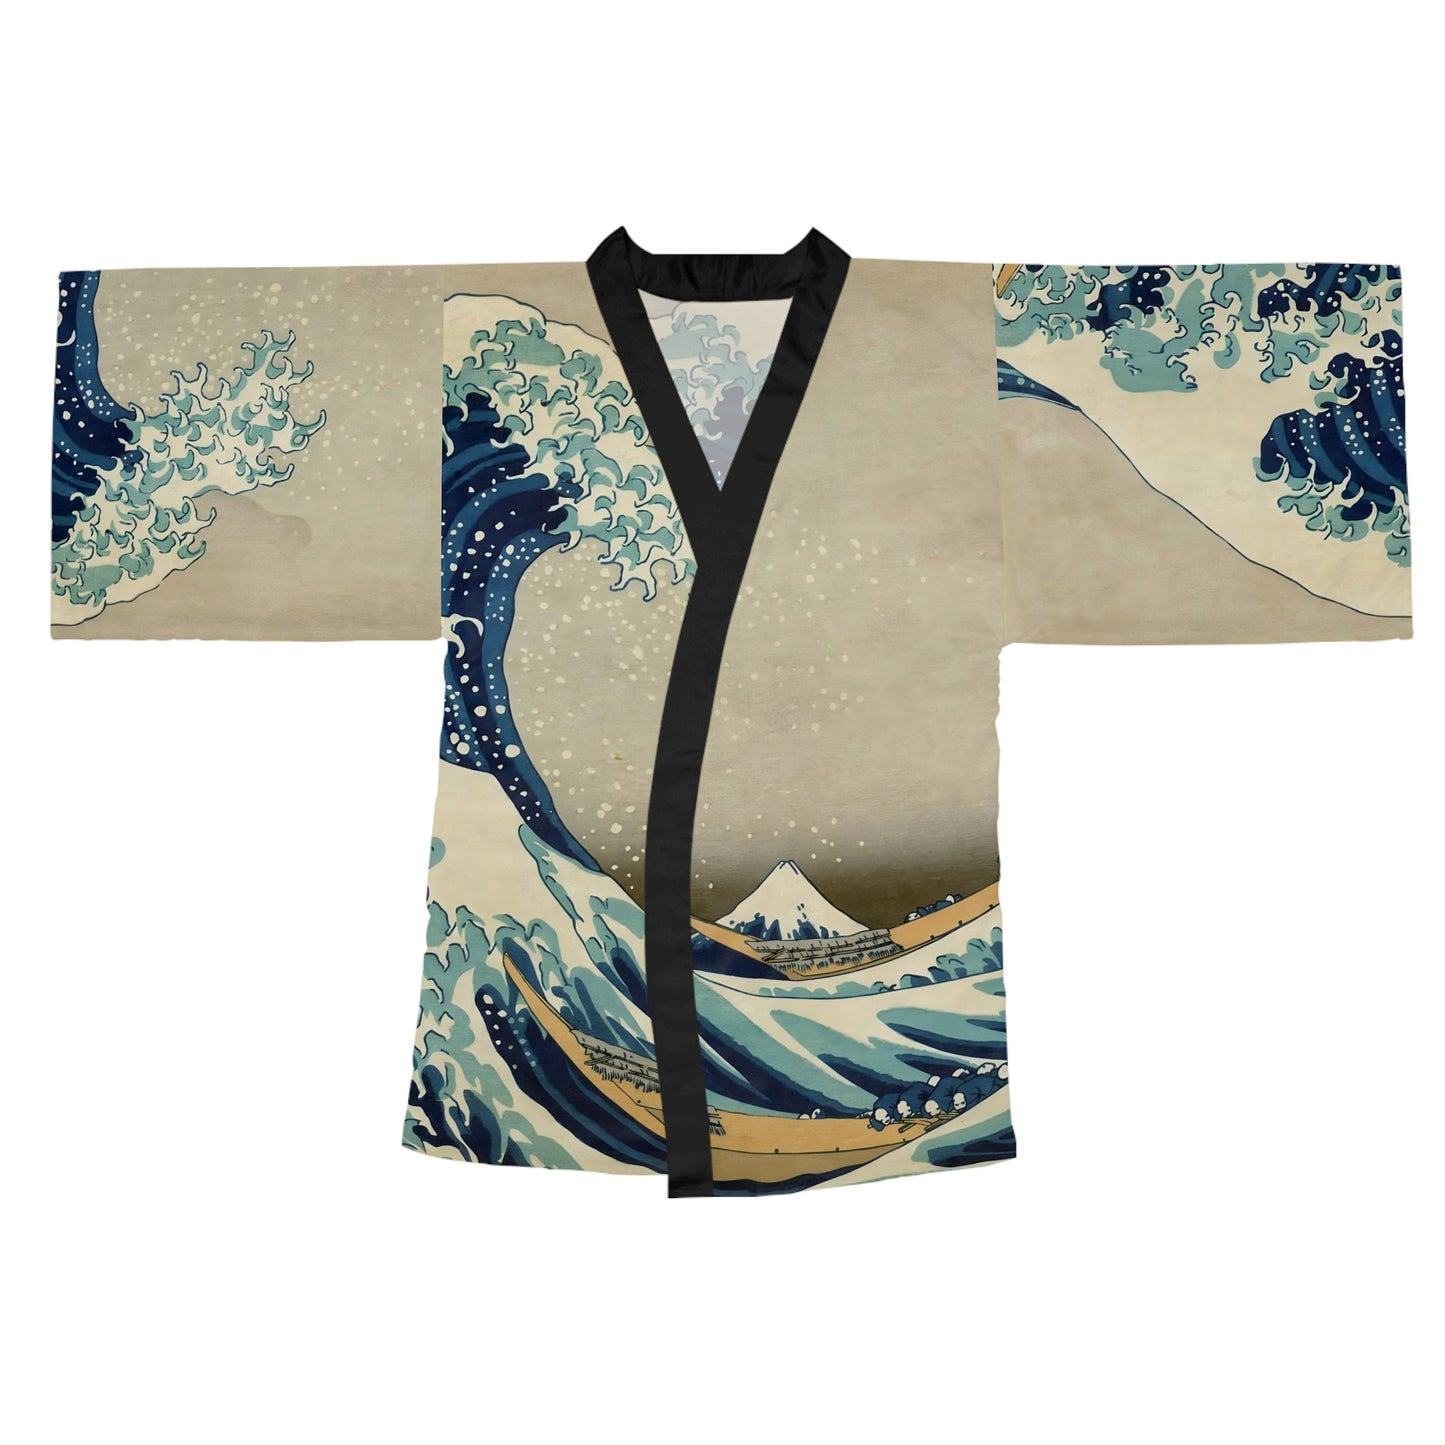 Kimono Robe The Great Wave off Kanagawa from Hokusai